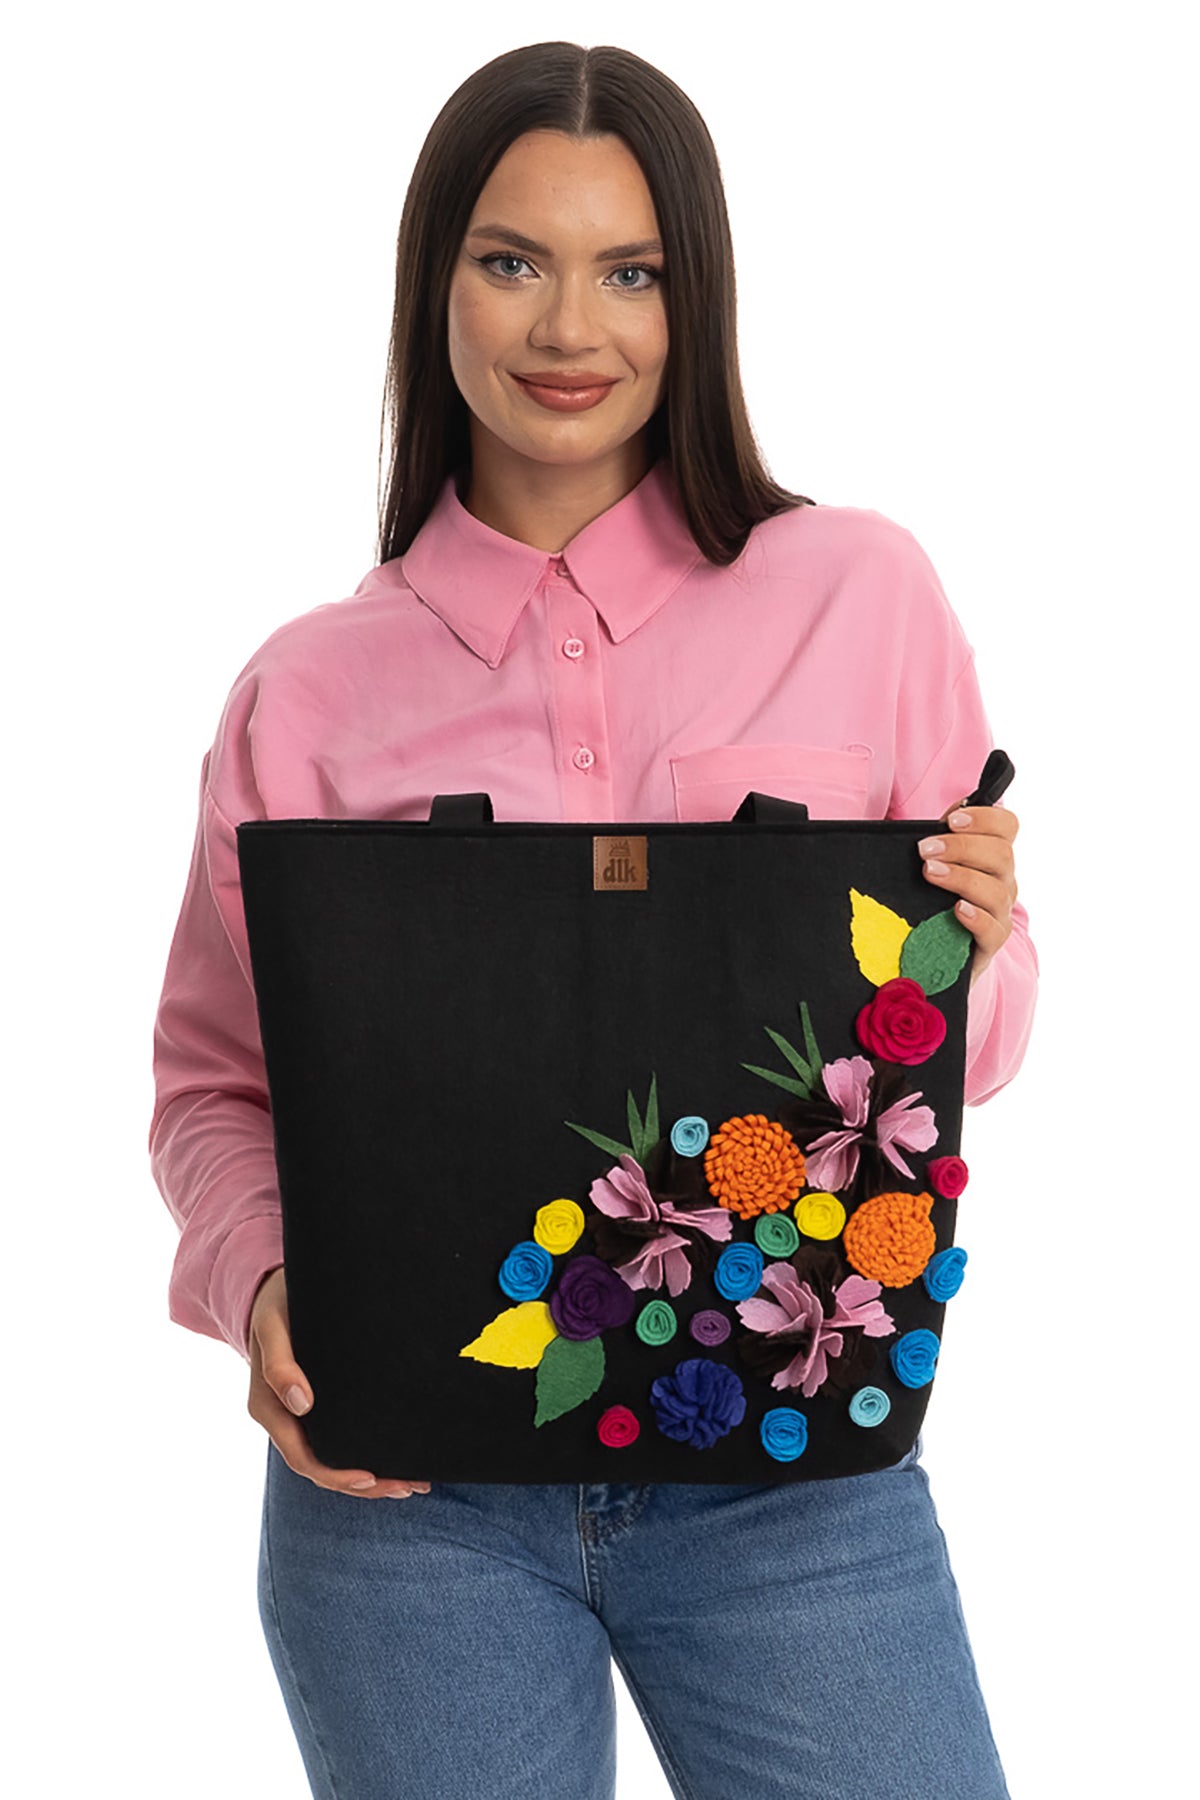 Handmade - Large Felt Shoulder Bag - Flower Corner - 40x35cm